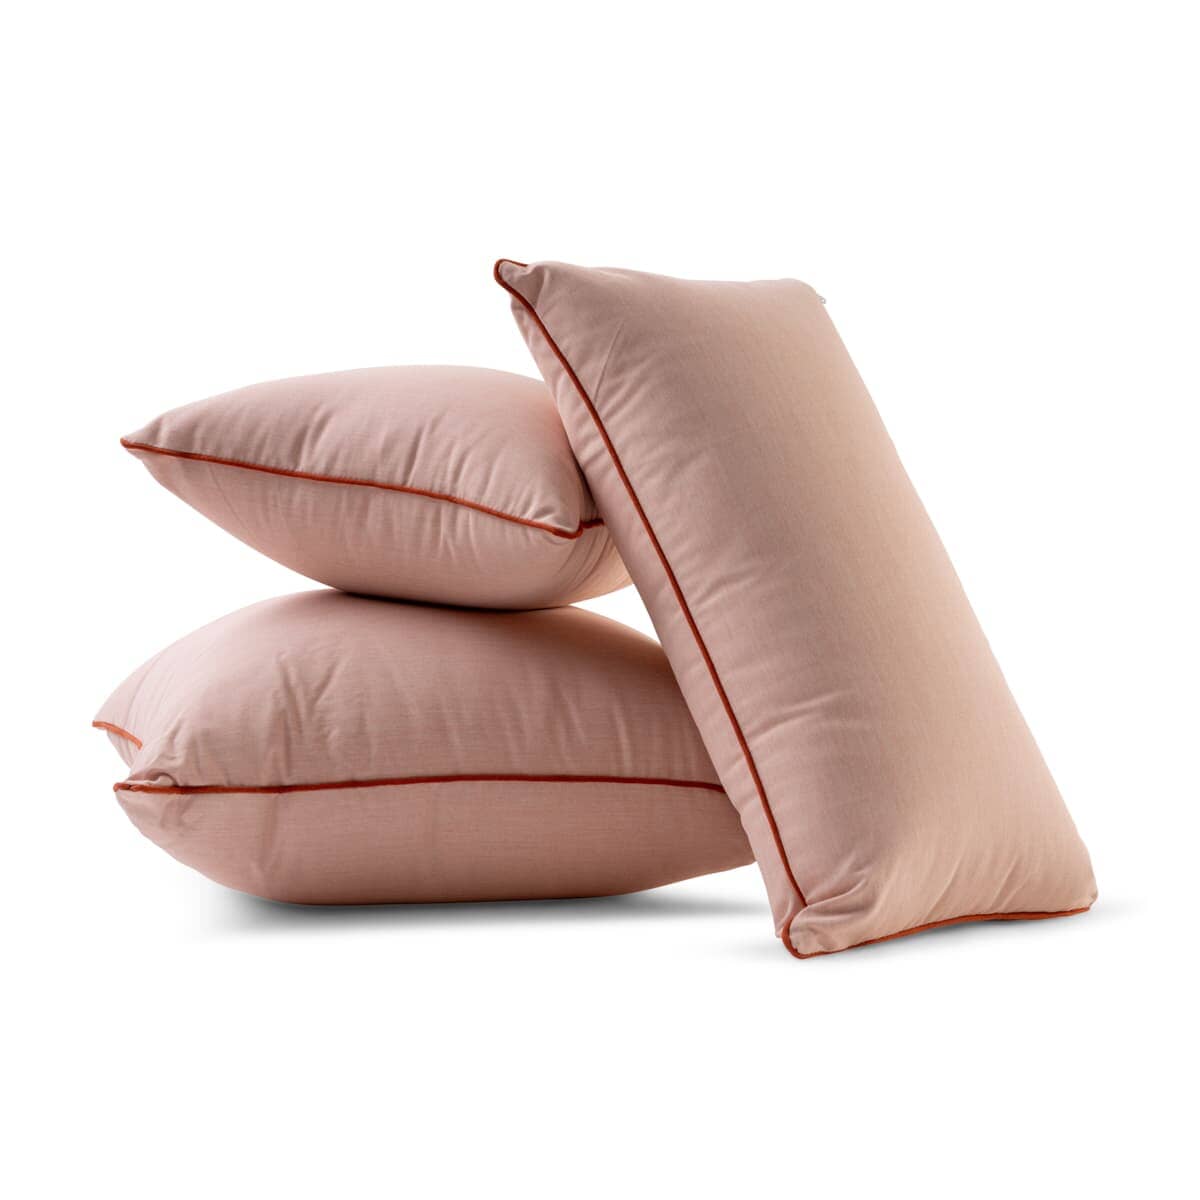 Studio image of riviera pink euro throw pillow